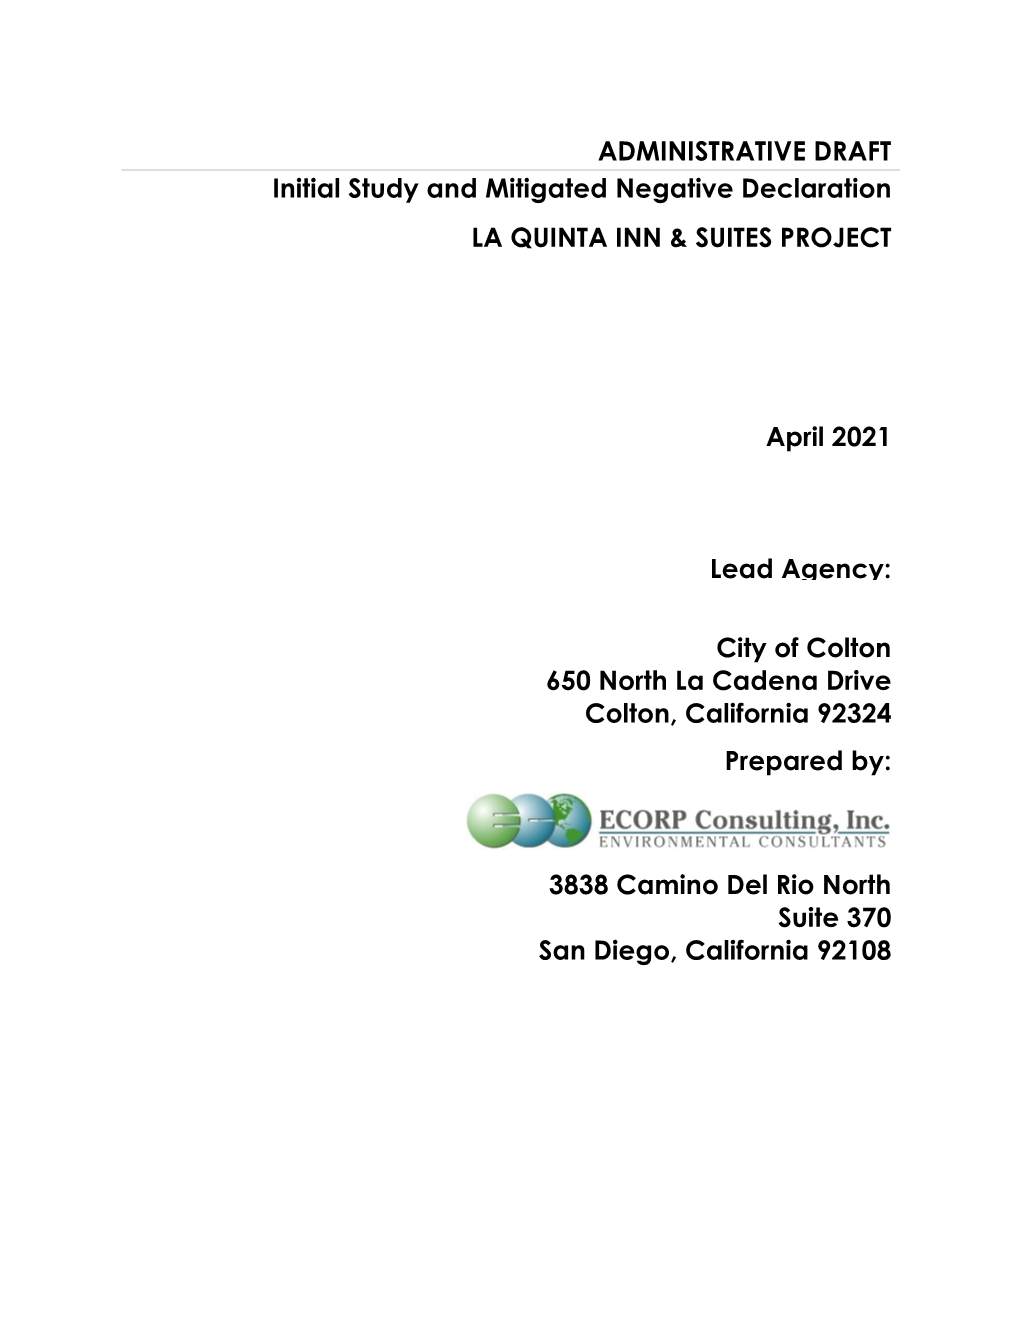 ADMINISTRATIVE DRAFT Initial Study and Mitigated Negative Declaration LA QUINTA INN & SUITES PROJECT